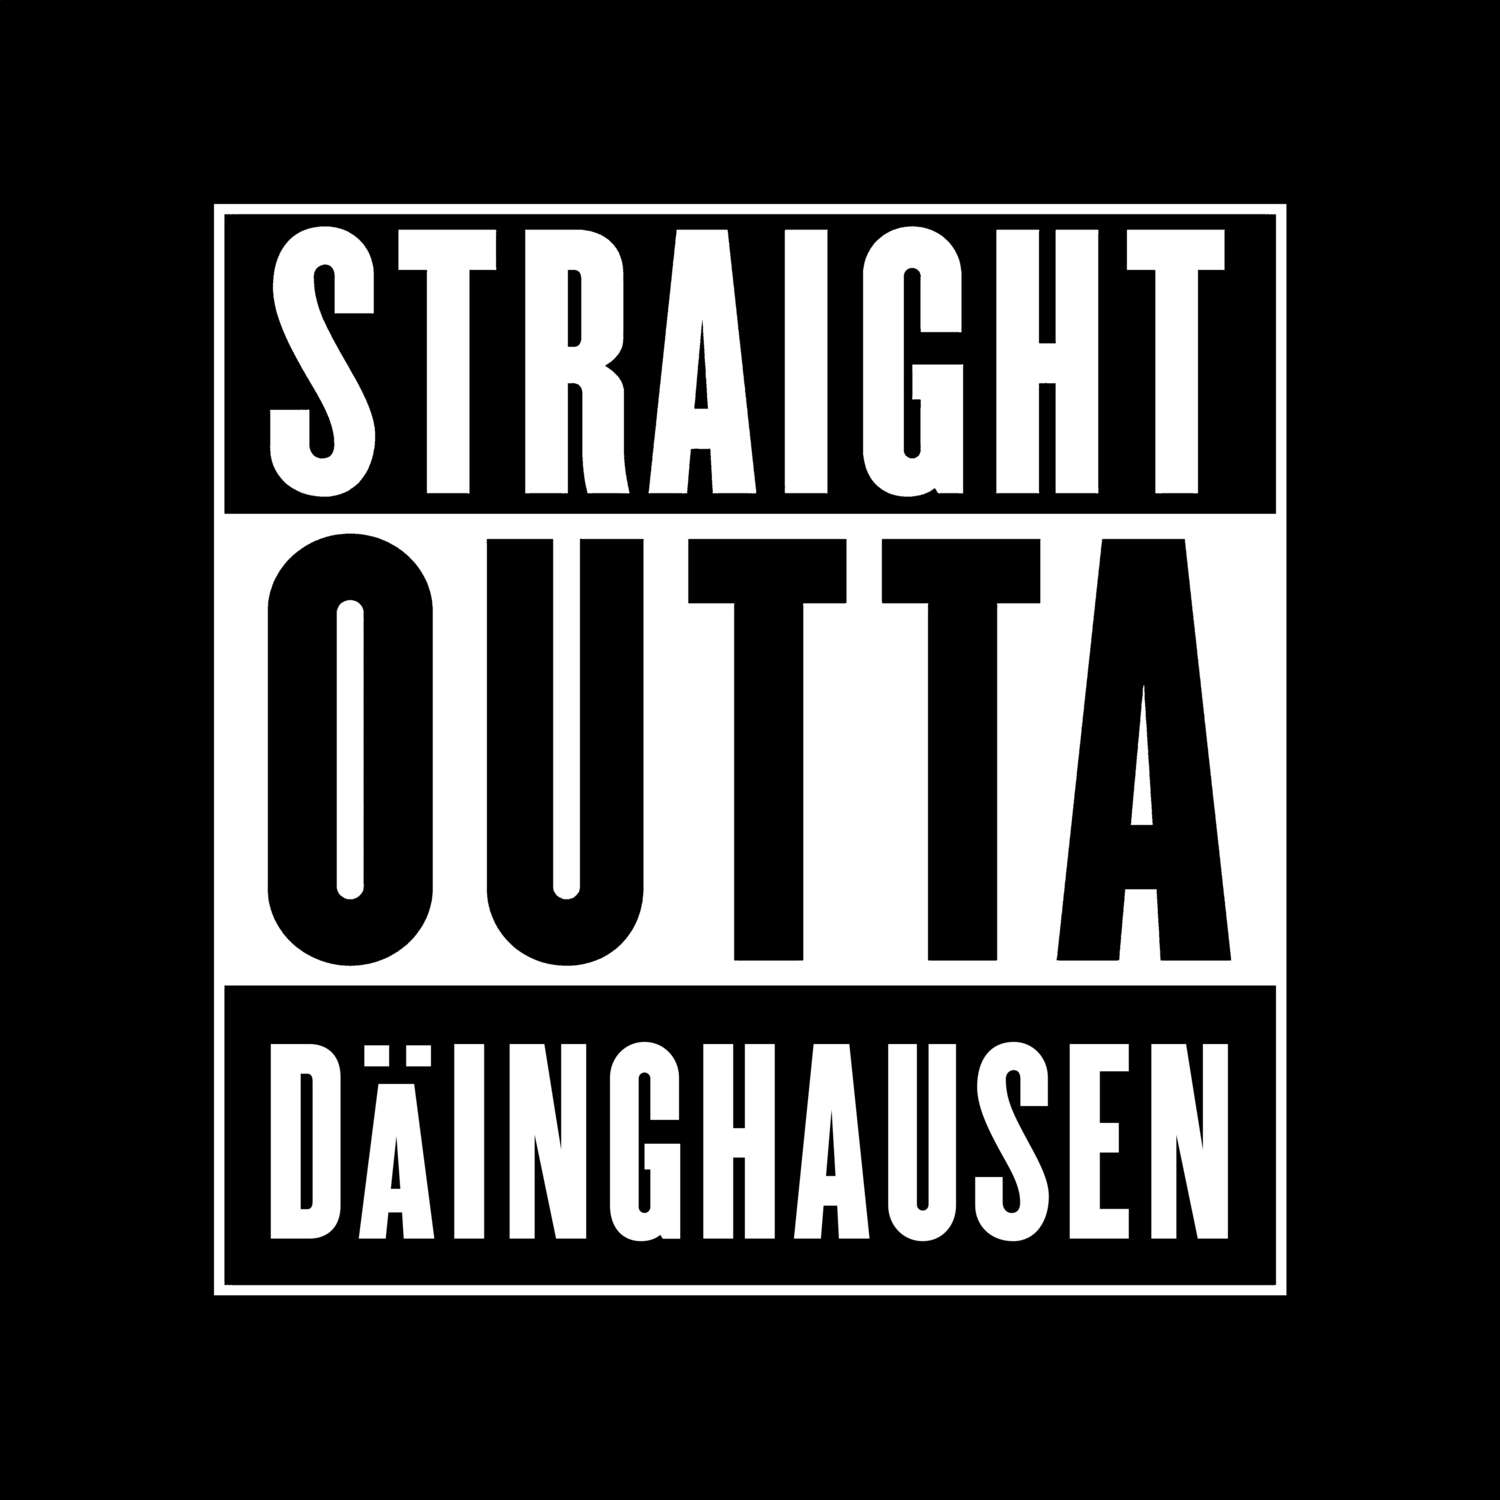 Däinghausen T-Shirt »Straight Outta«